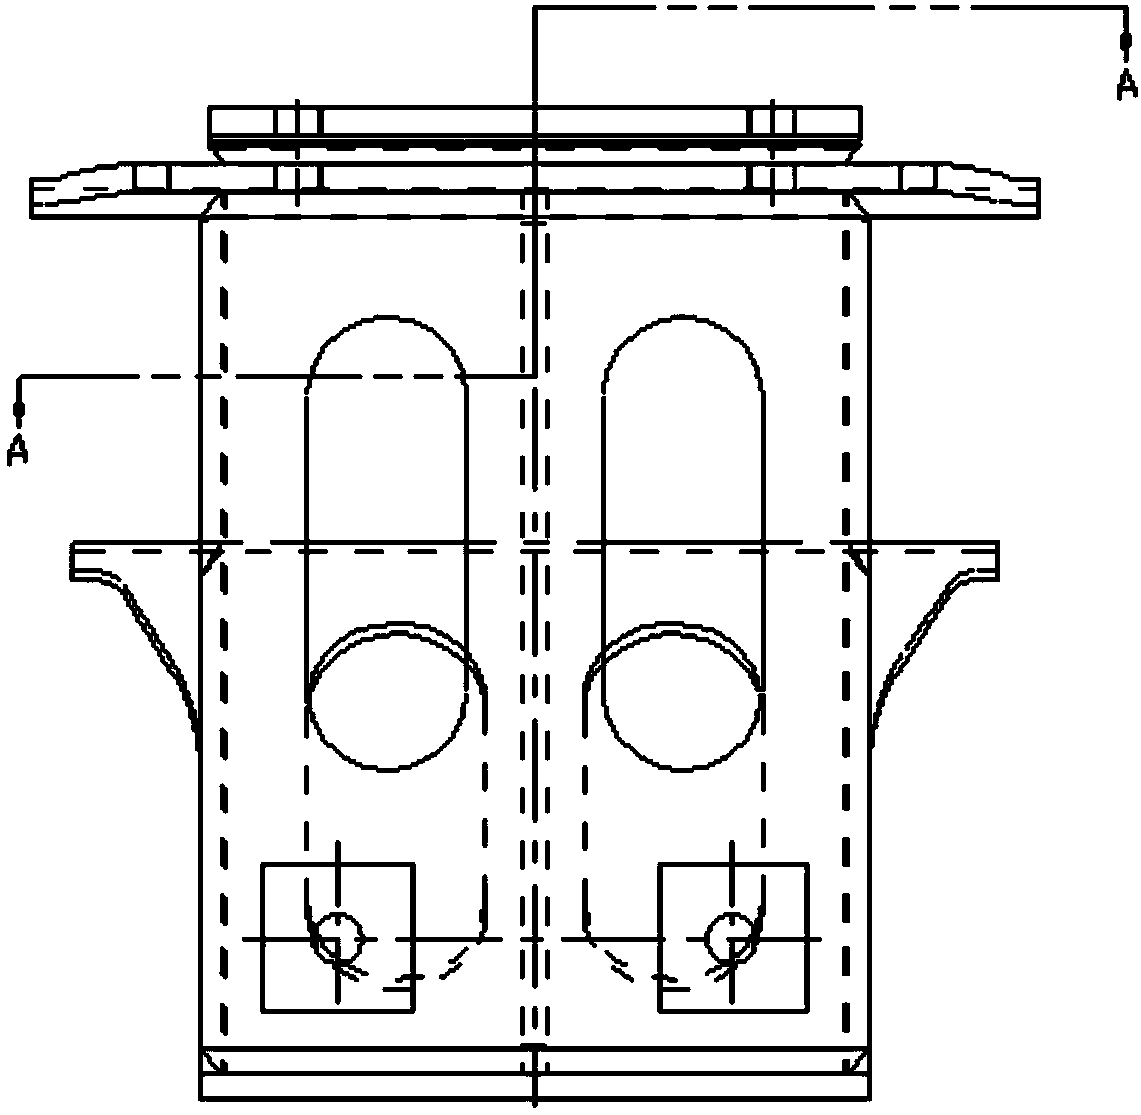 Motor suspension of urban rail vehicle